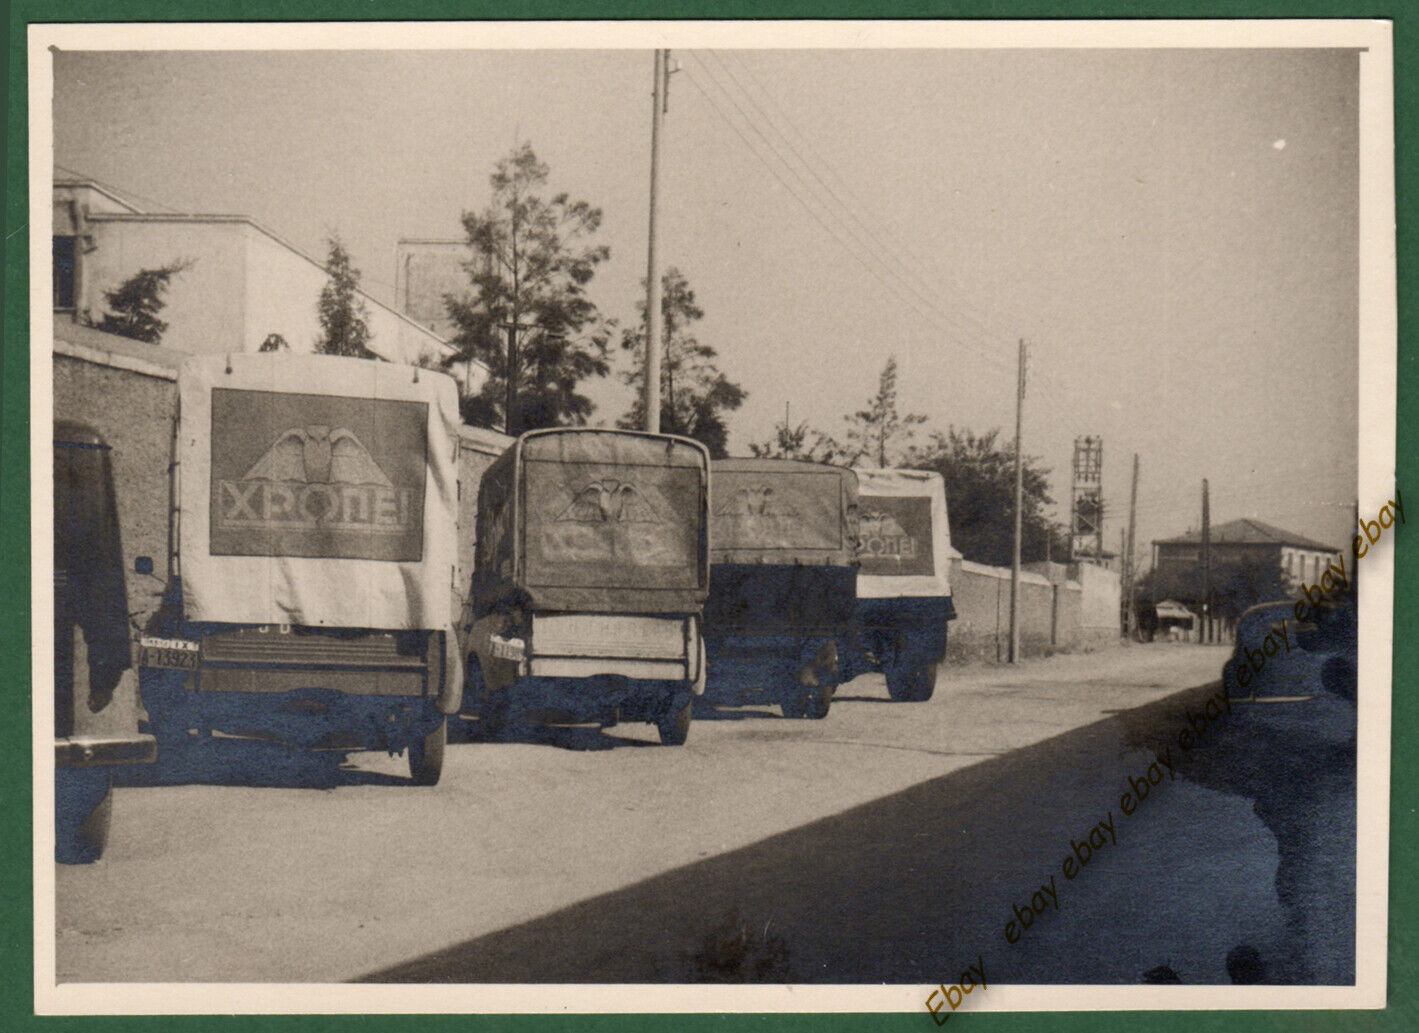 #39439 ATHENS Greece 1950s. Trucks of the pharmaceutical industry Chropi. Photo.